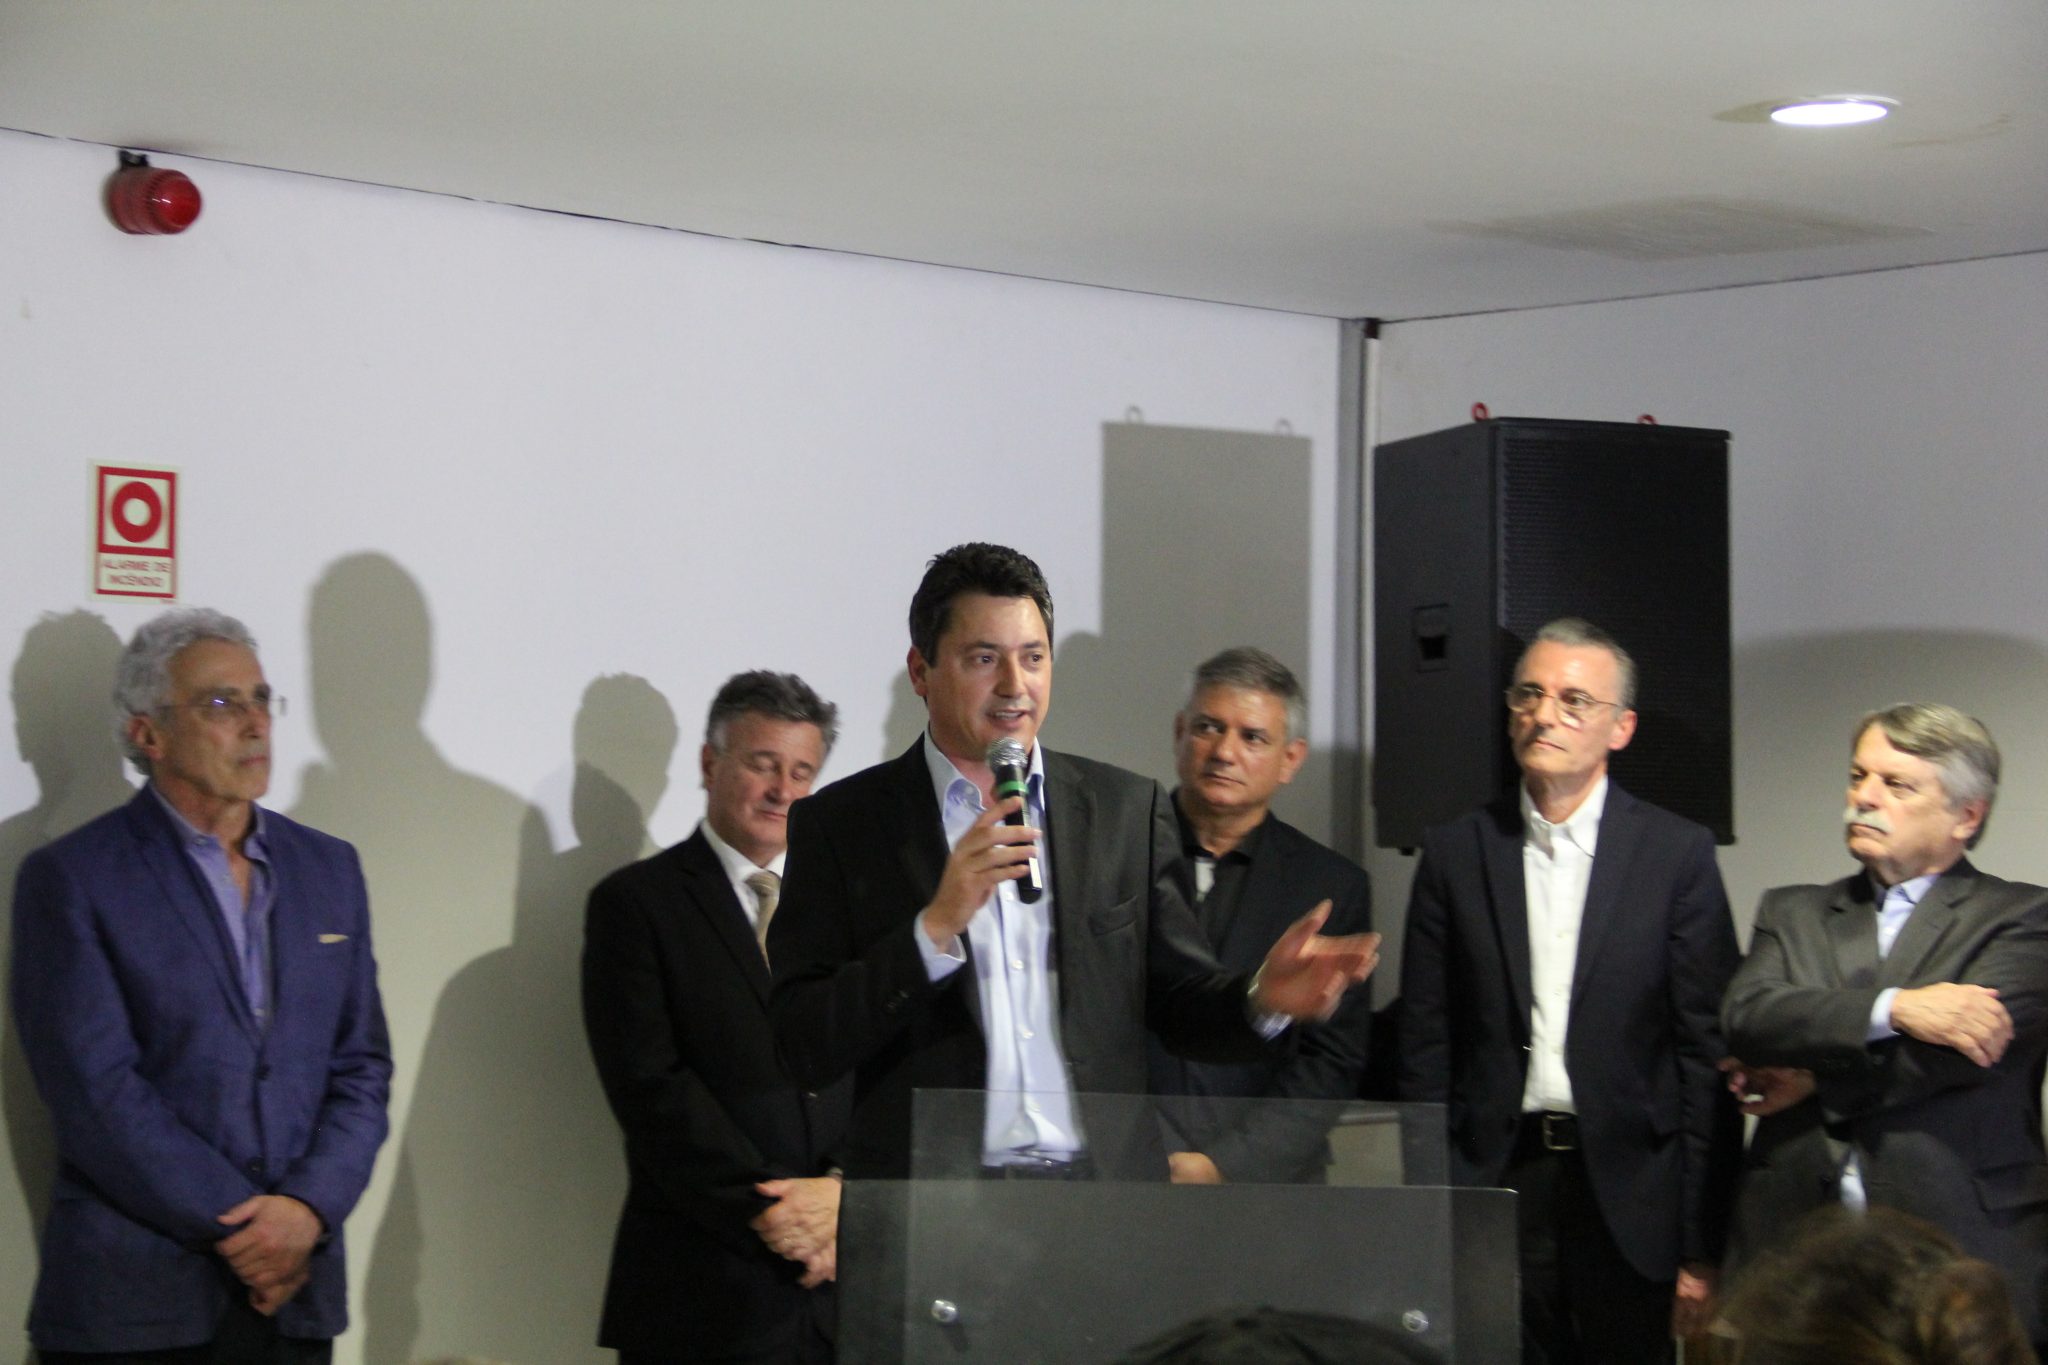 IMG 0131 - Sérgio Souza participa da abertura da Bienal de Curitiba 2015